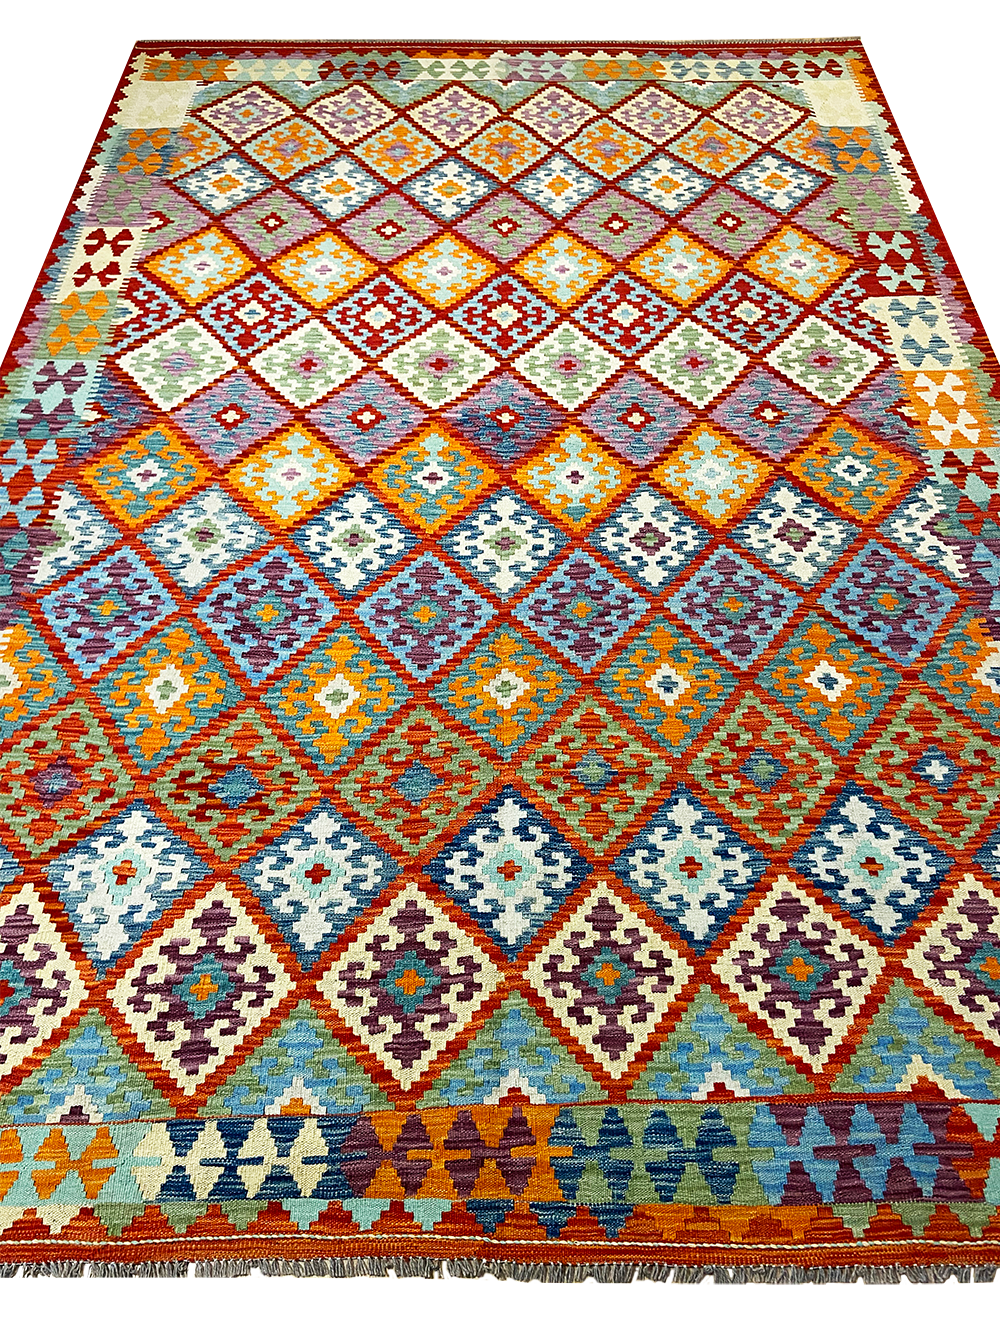 Handmade Colorful Kilim Area Rug  6' 9" X 9' 9"